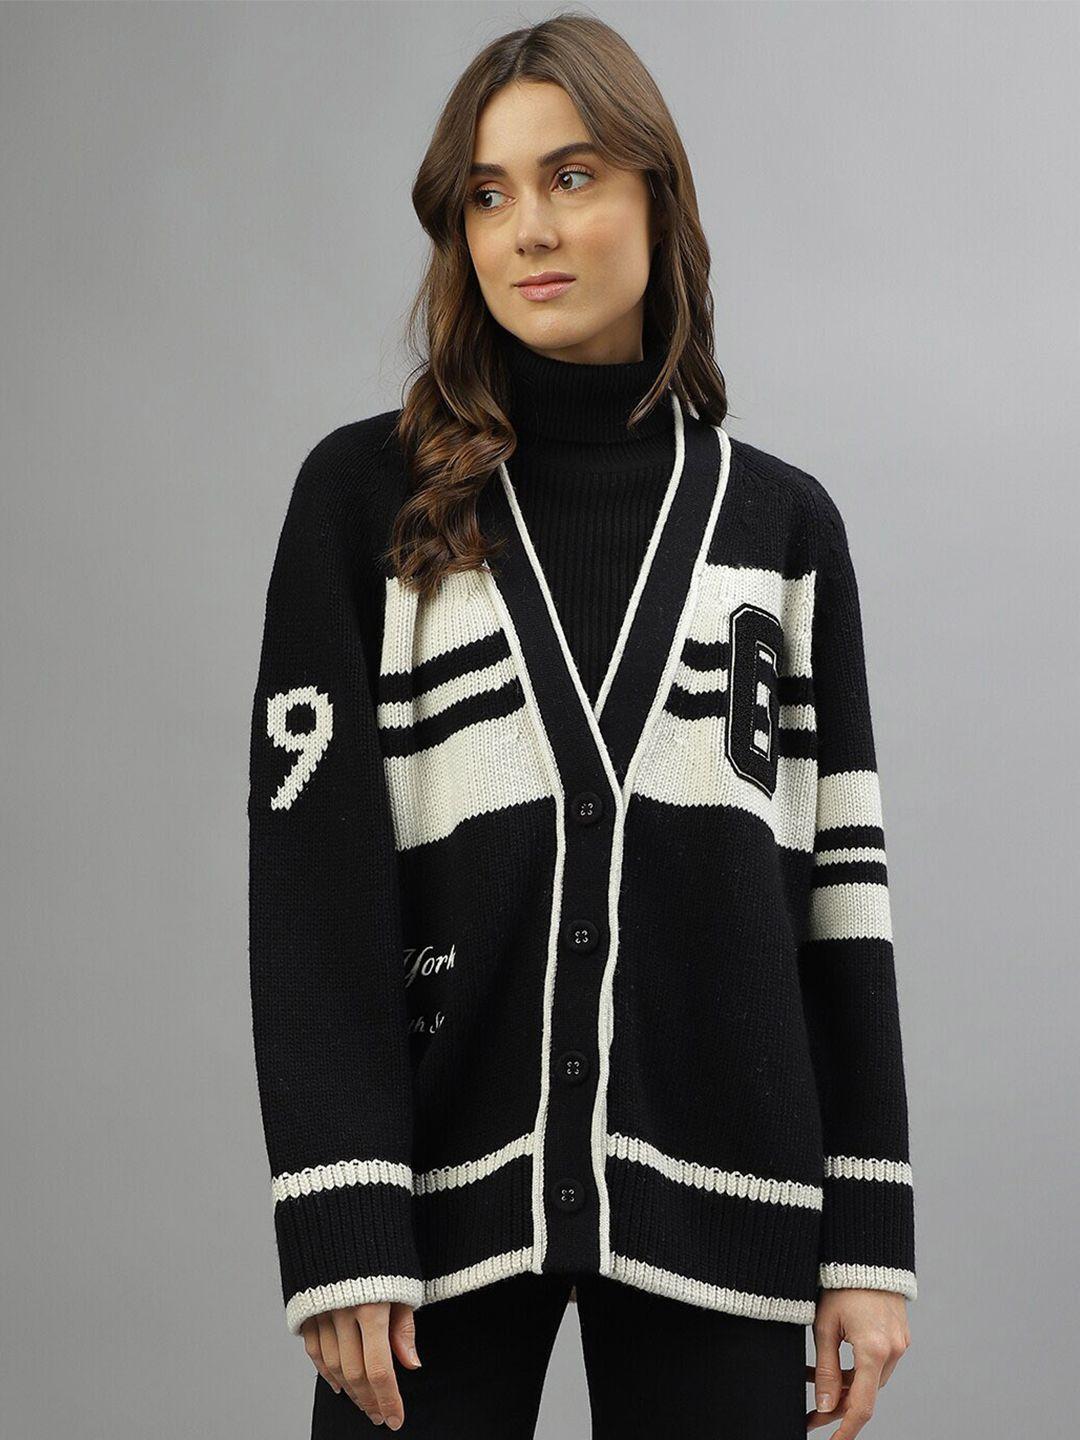 gant-v-neck-open-knit-printed-cardigan-sweater